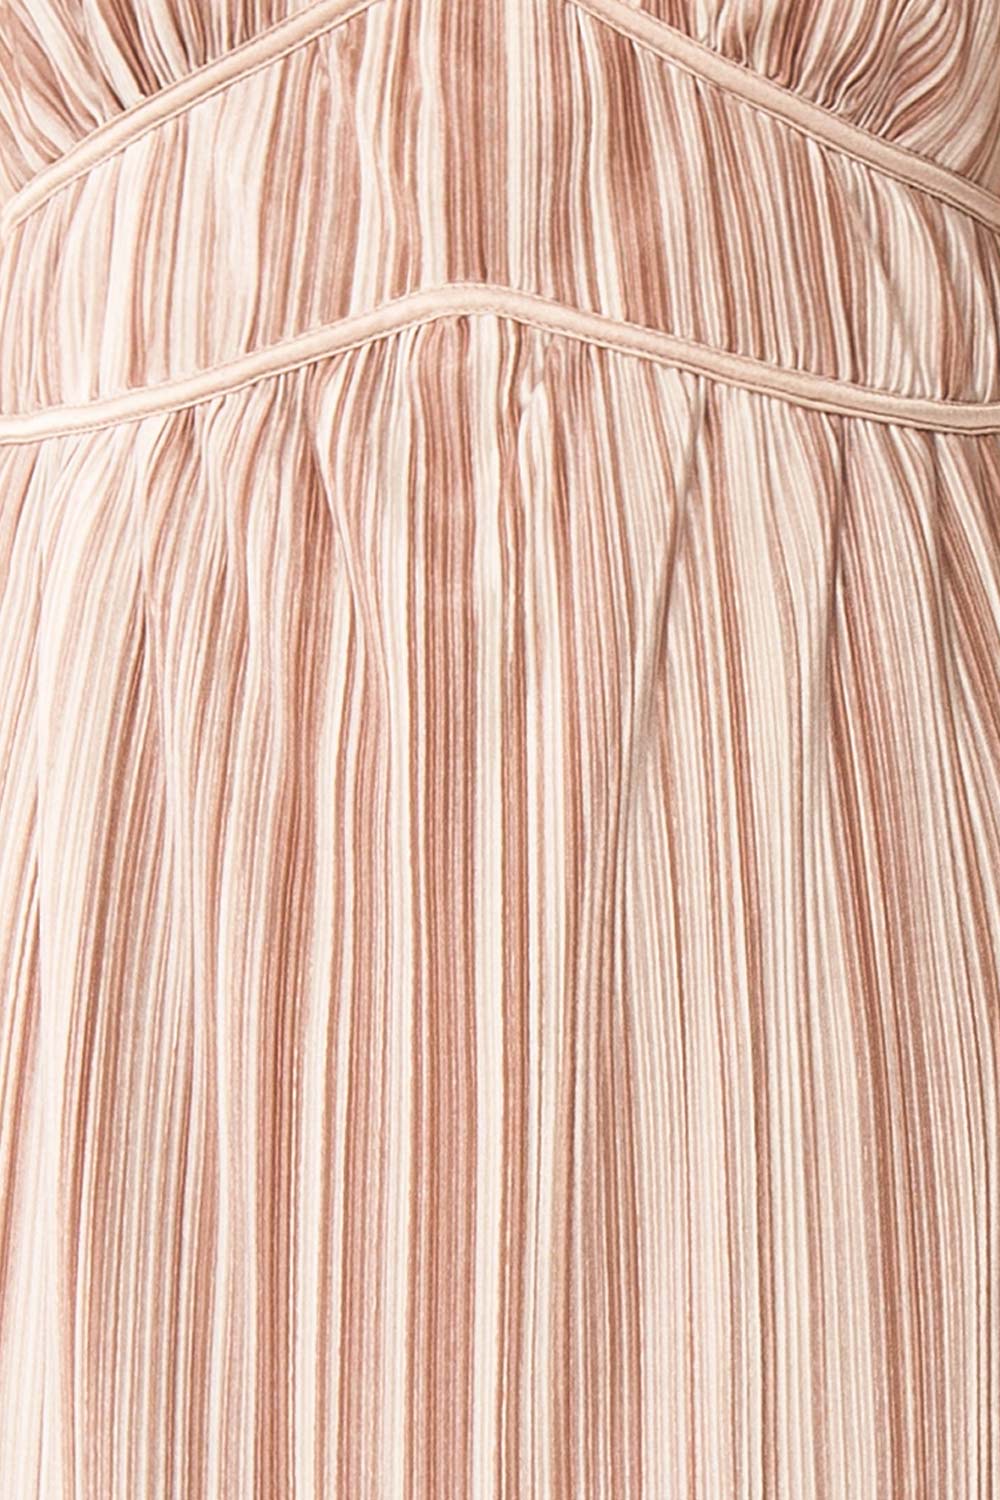 Gloriane Pleated Beige Multi-Tone Dress | Boutique 1861 fabric 